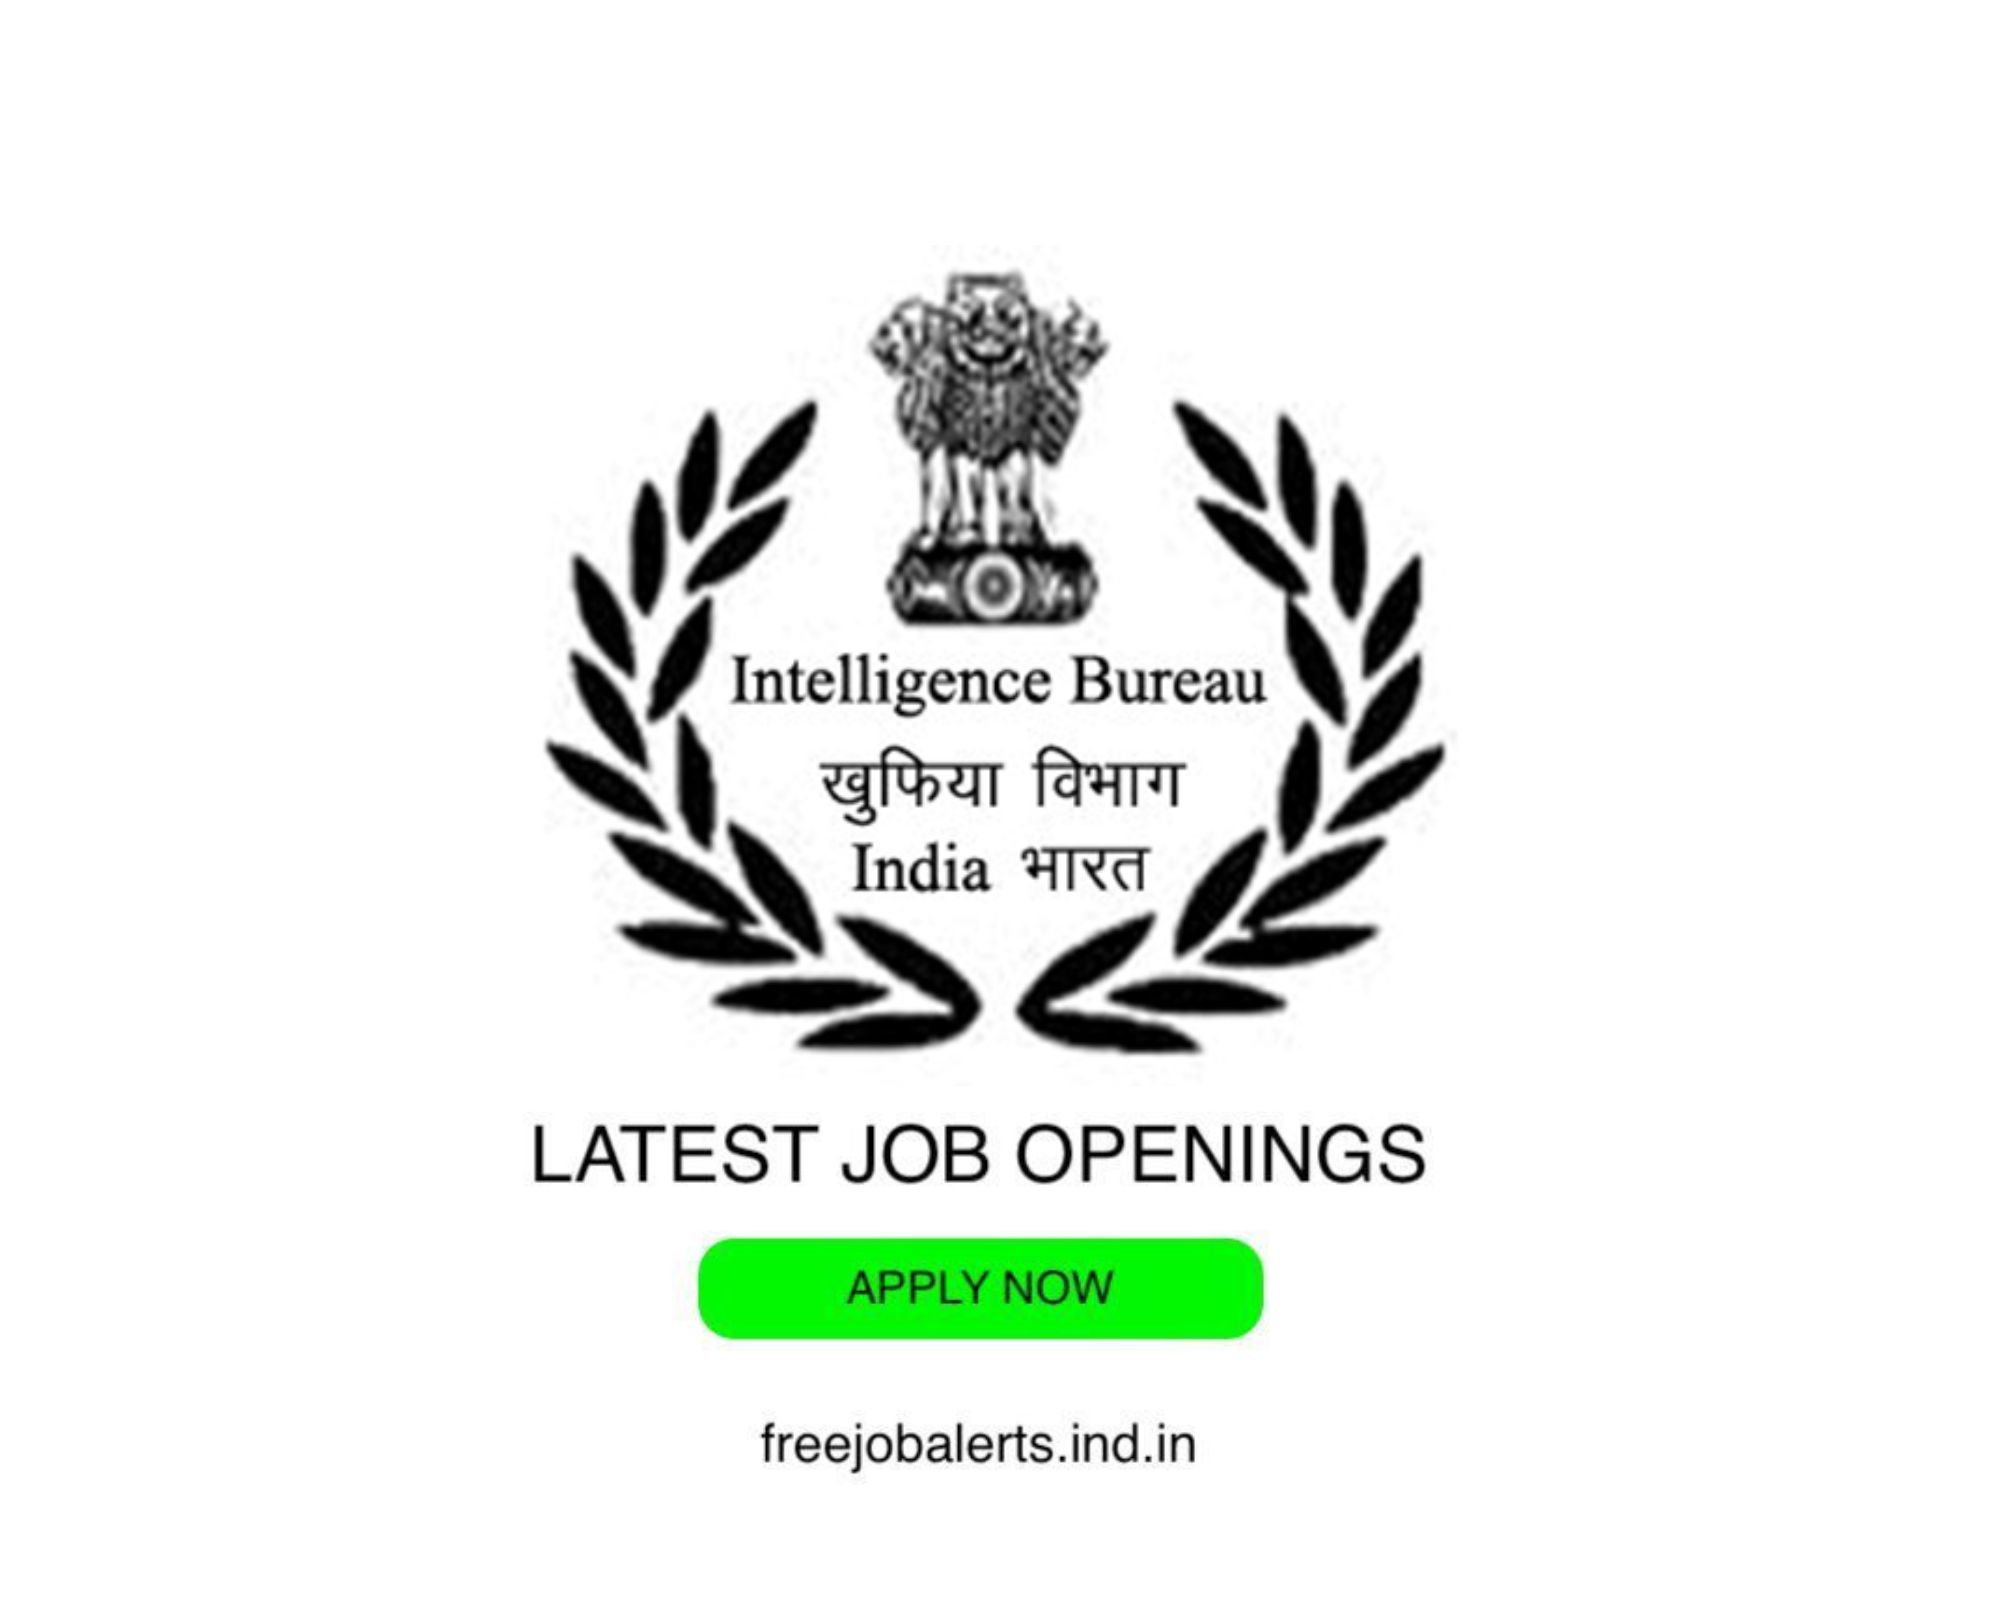 Intelligence Bureau - Latest Govt job openings - Free job alerts, Indian Govt Jobs